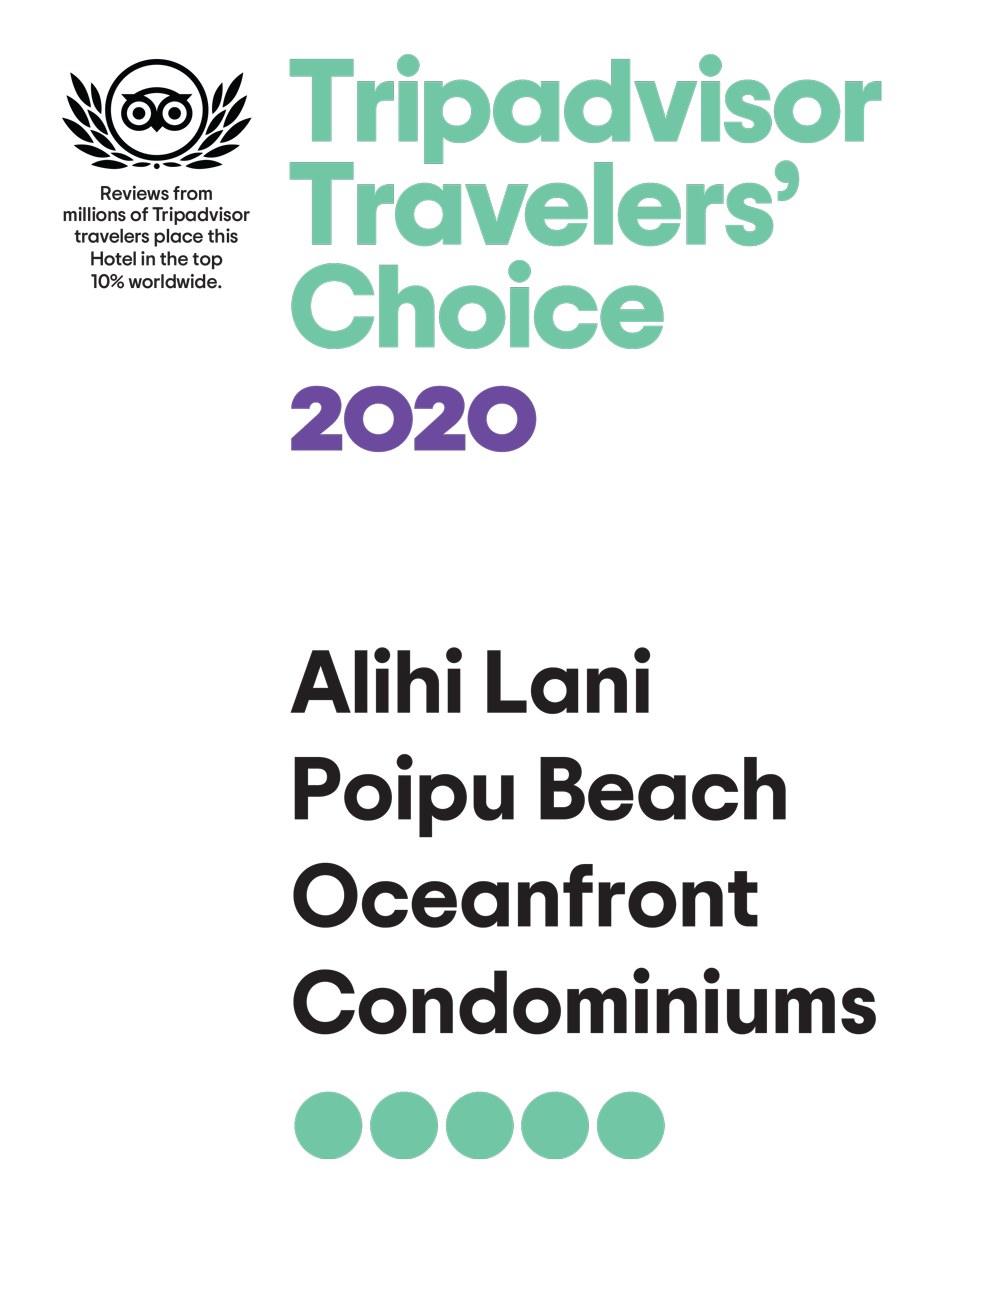 Tripadvisor Travelers' Choice 2020 Award to Alihi Lani Poipu Beach Oceanfront Condominiums